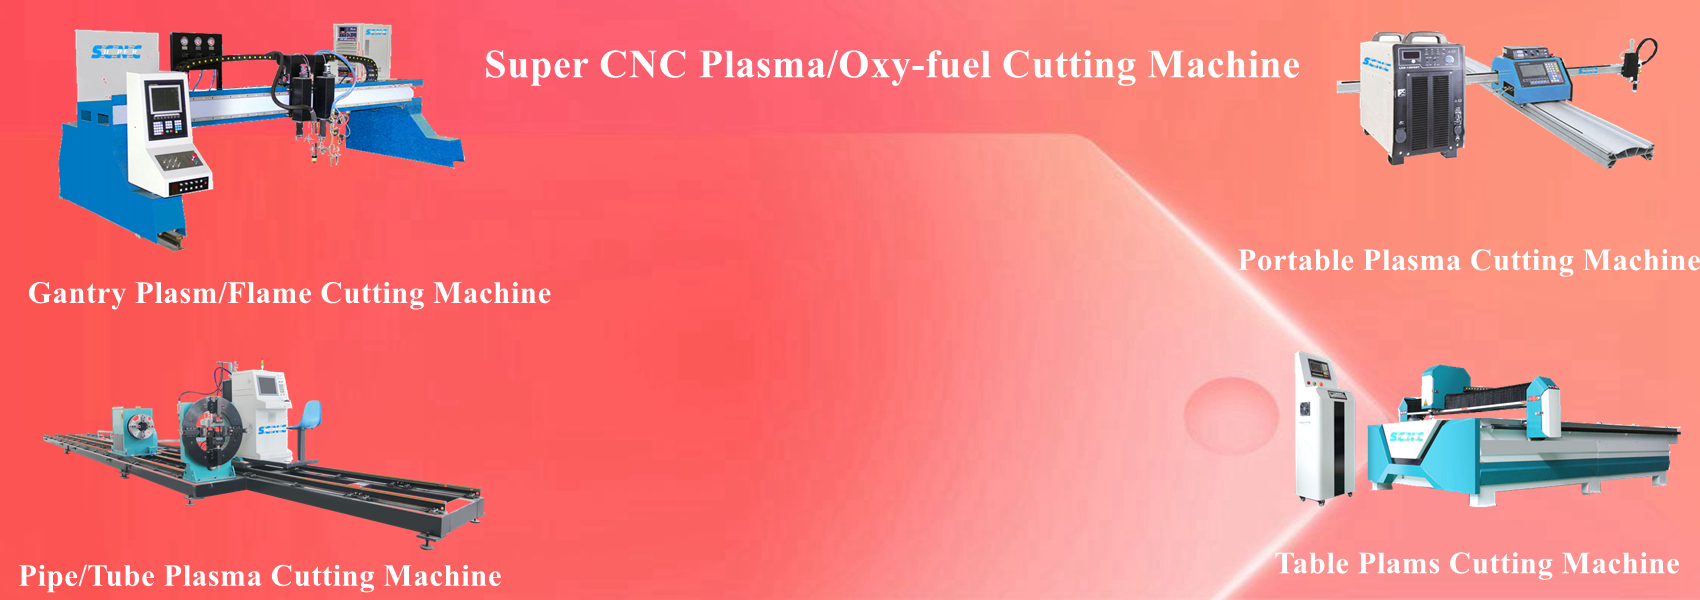 Super CNC Plasma Cutting Mahine